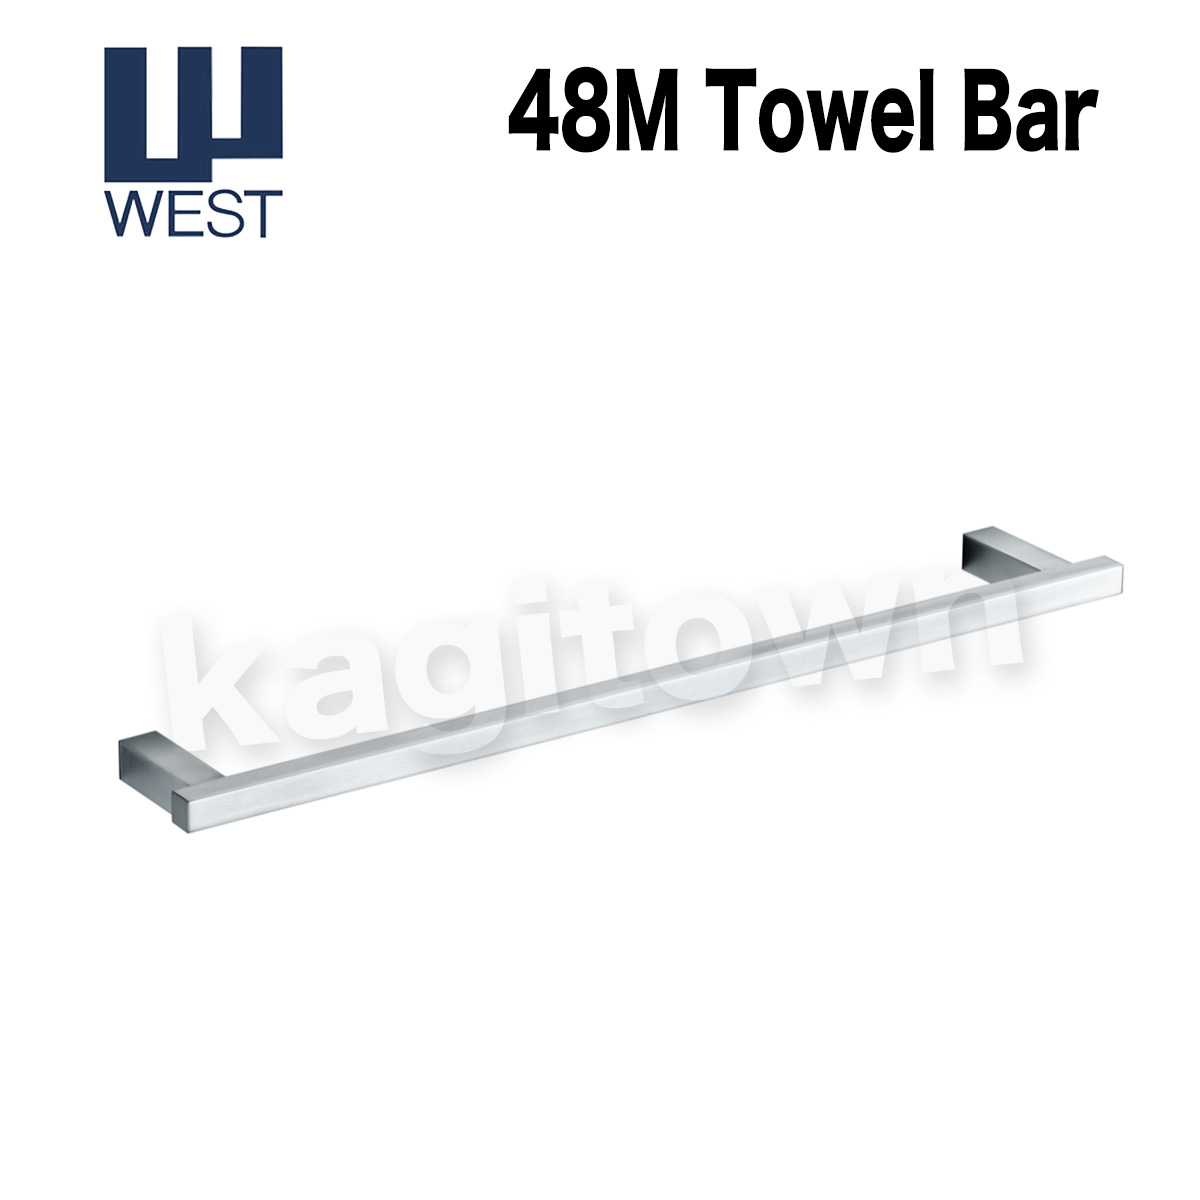 WEST 【ウエスト】タオルバー[WEST-46M]3edzero 48M Towel Bar